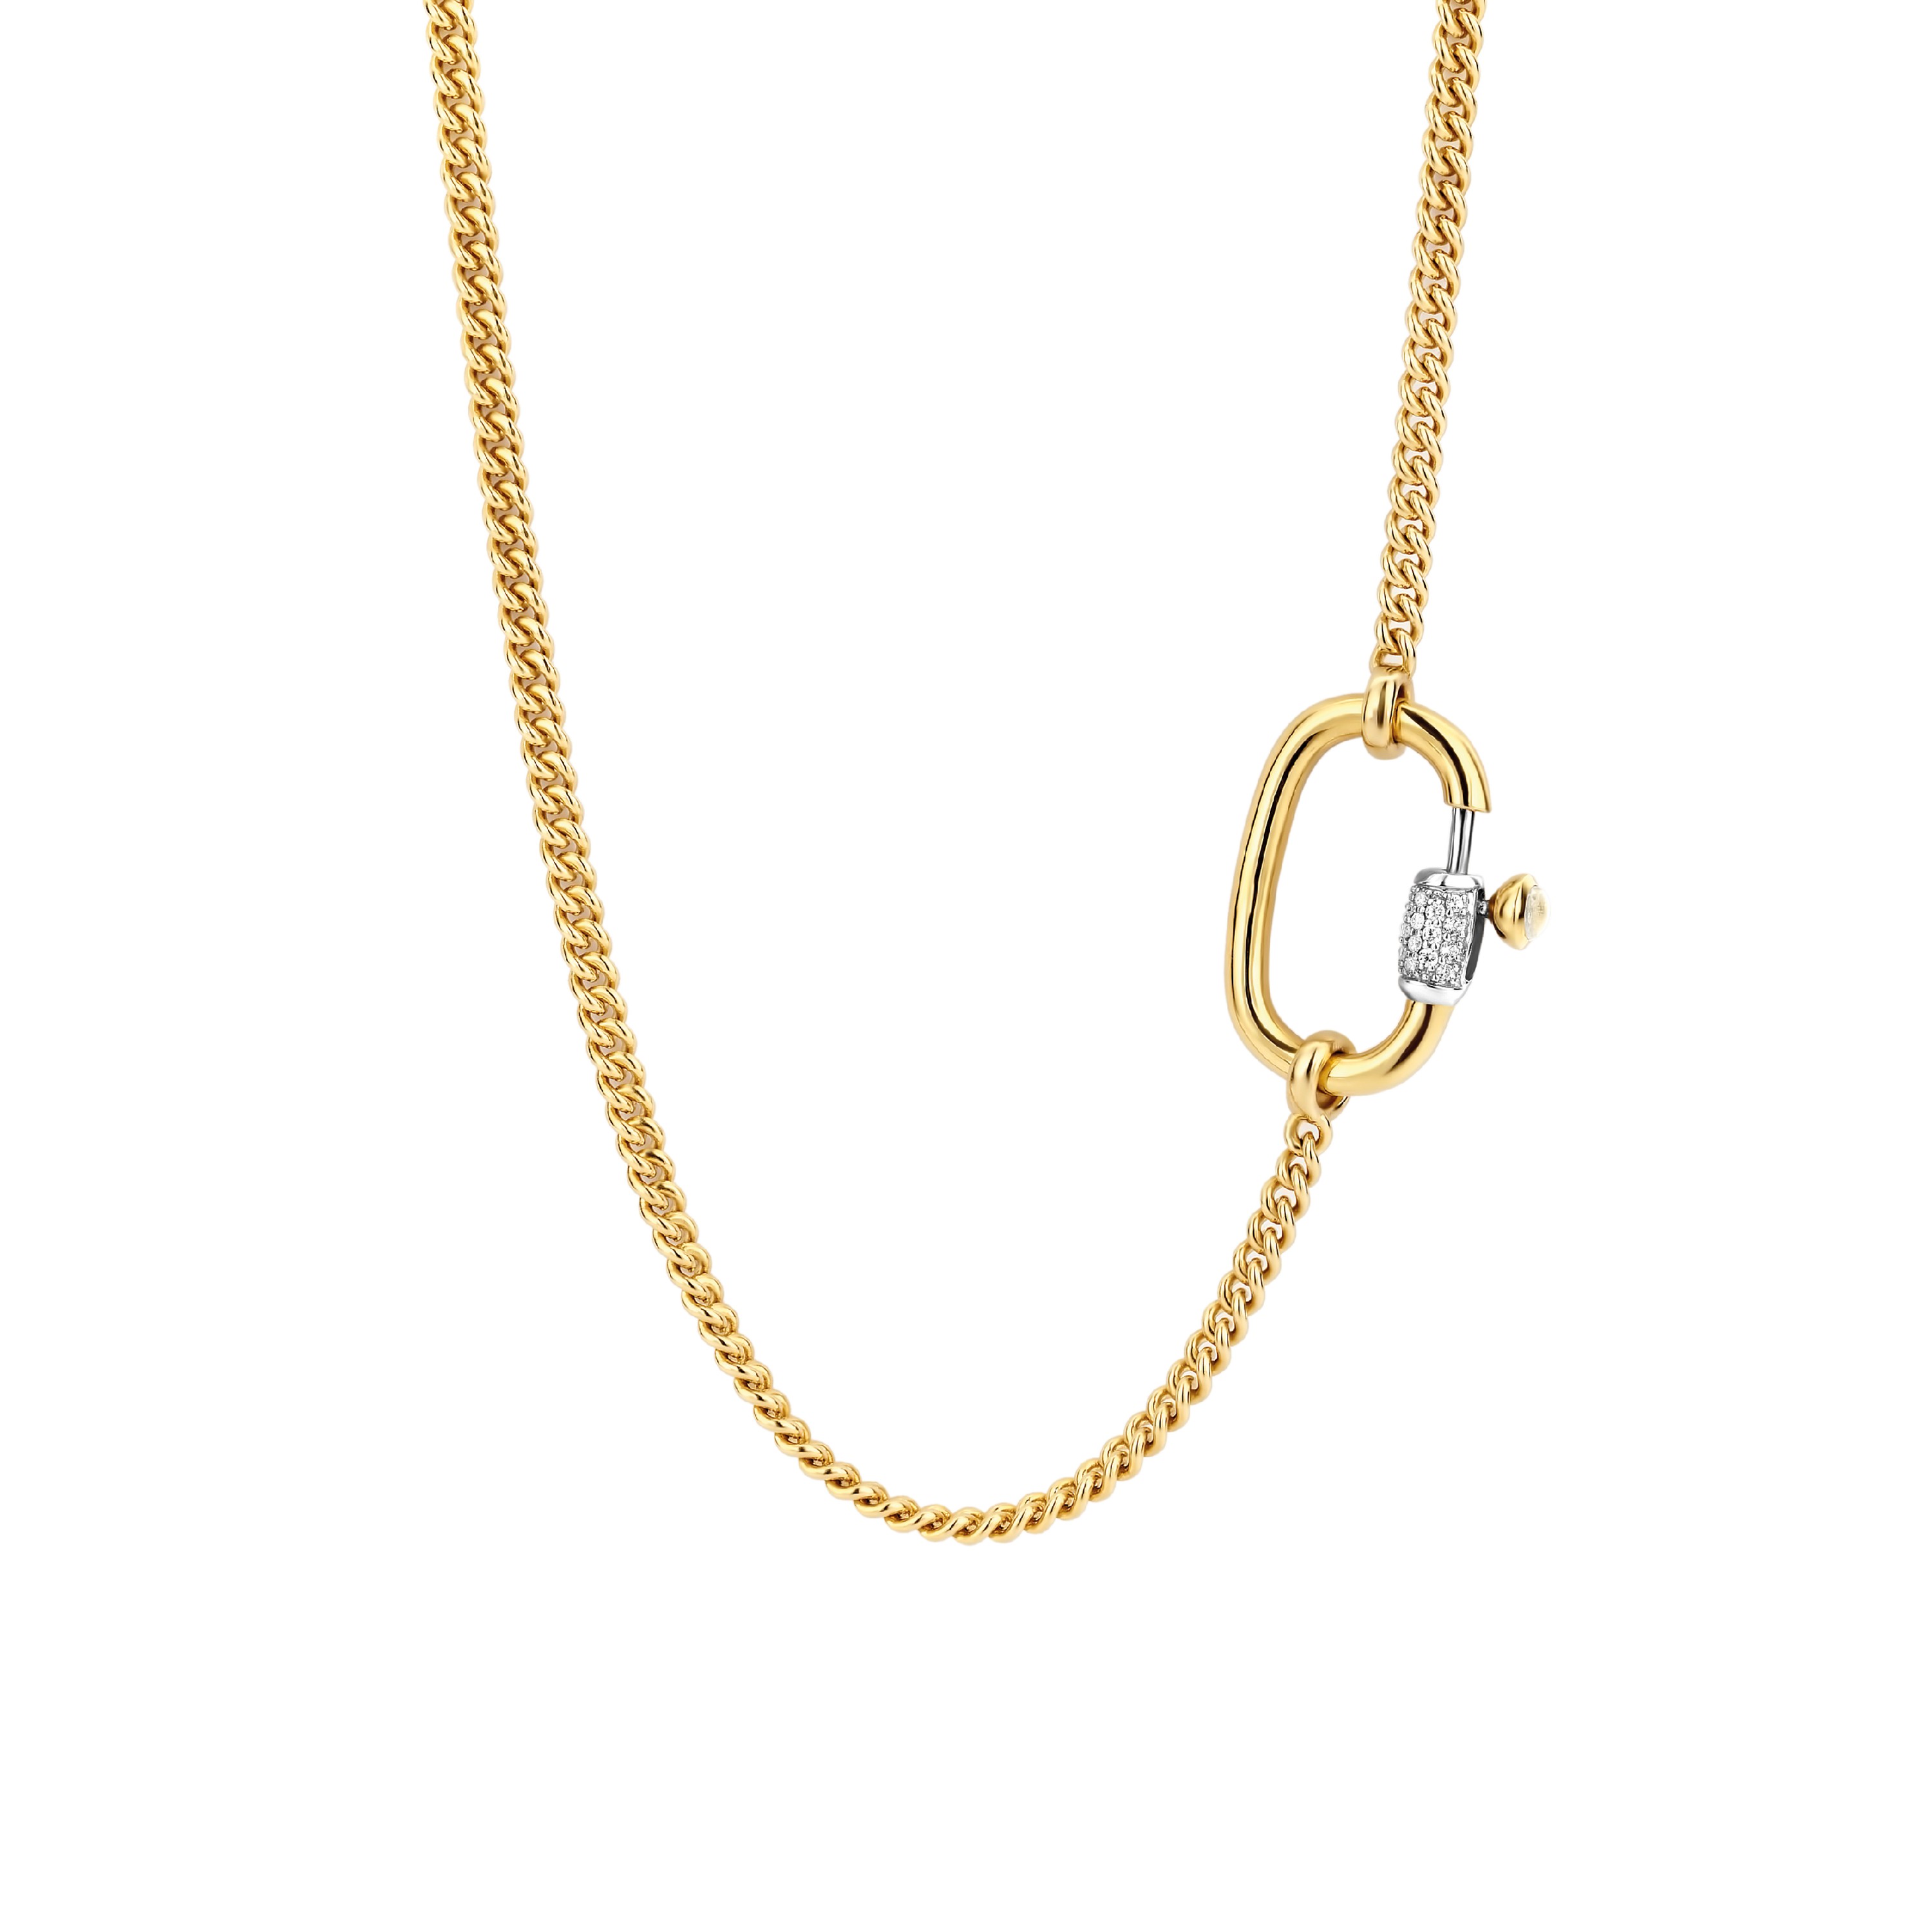 TI SENTO - Milano Necklace 3968SY Gala Jewelers Inc. White Oak, PA